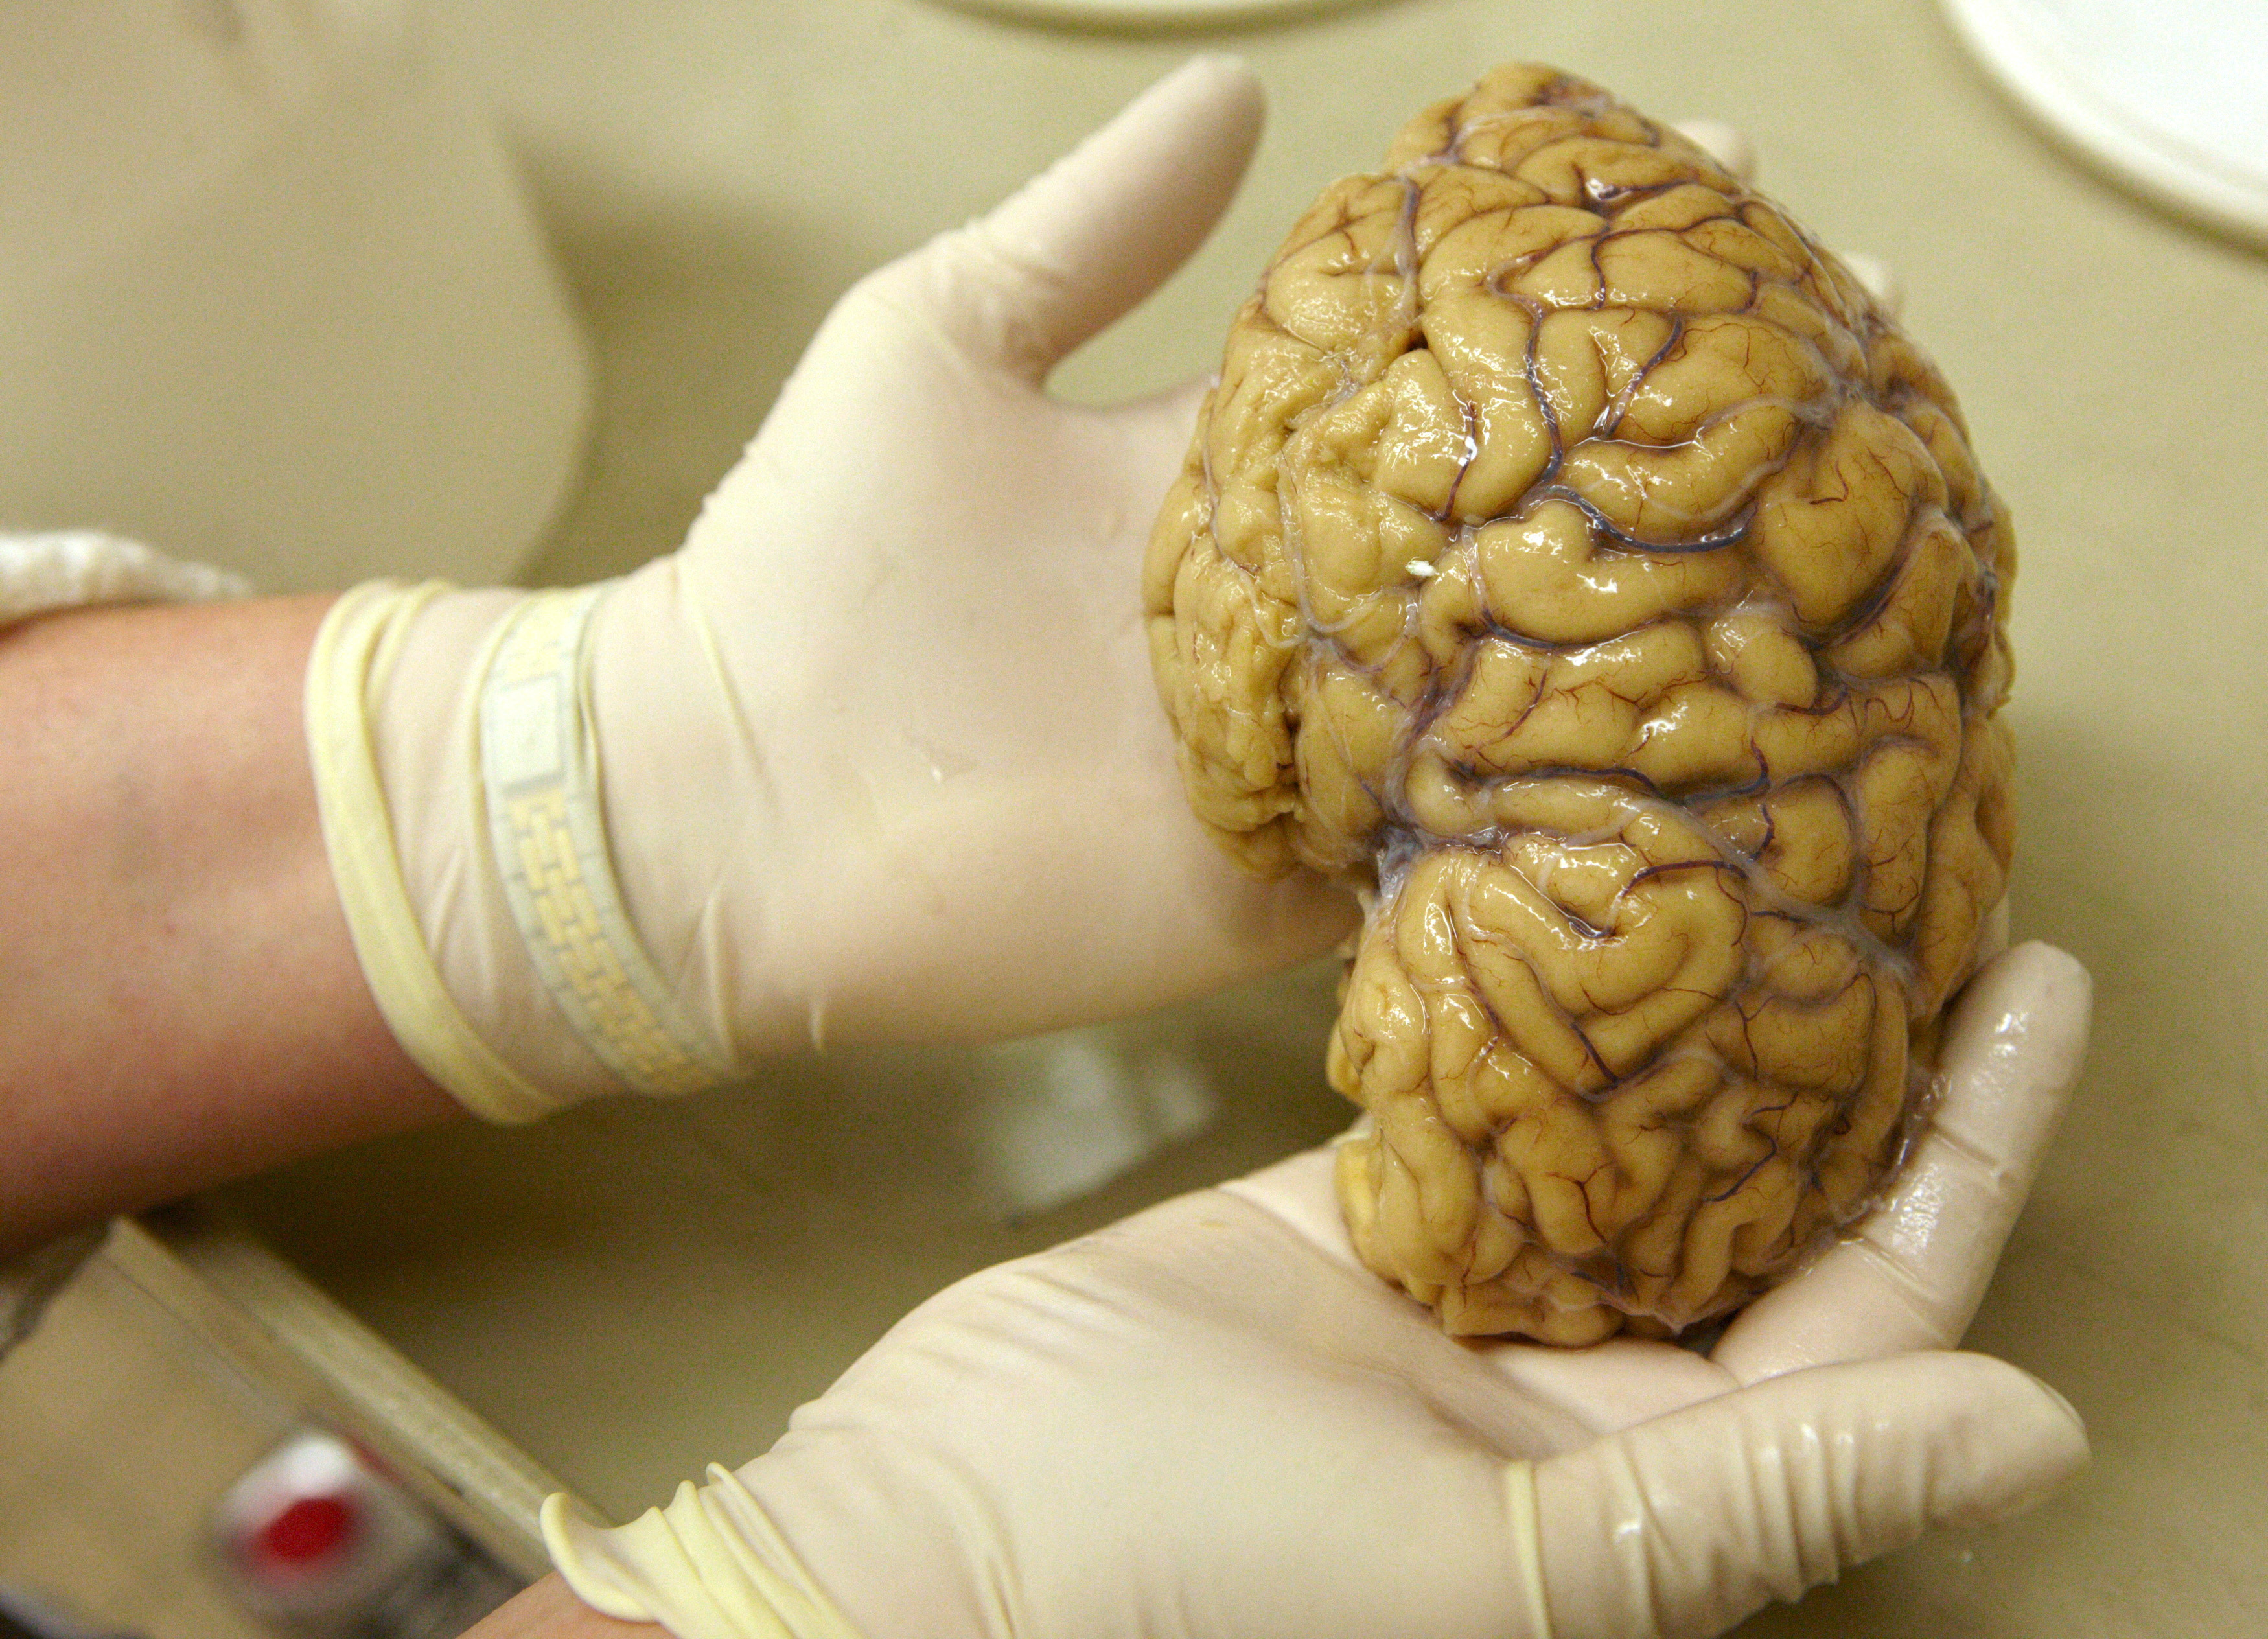 How many neurons make a human brain? Billions fewer than we thought, Neuroscience